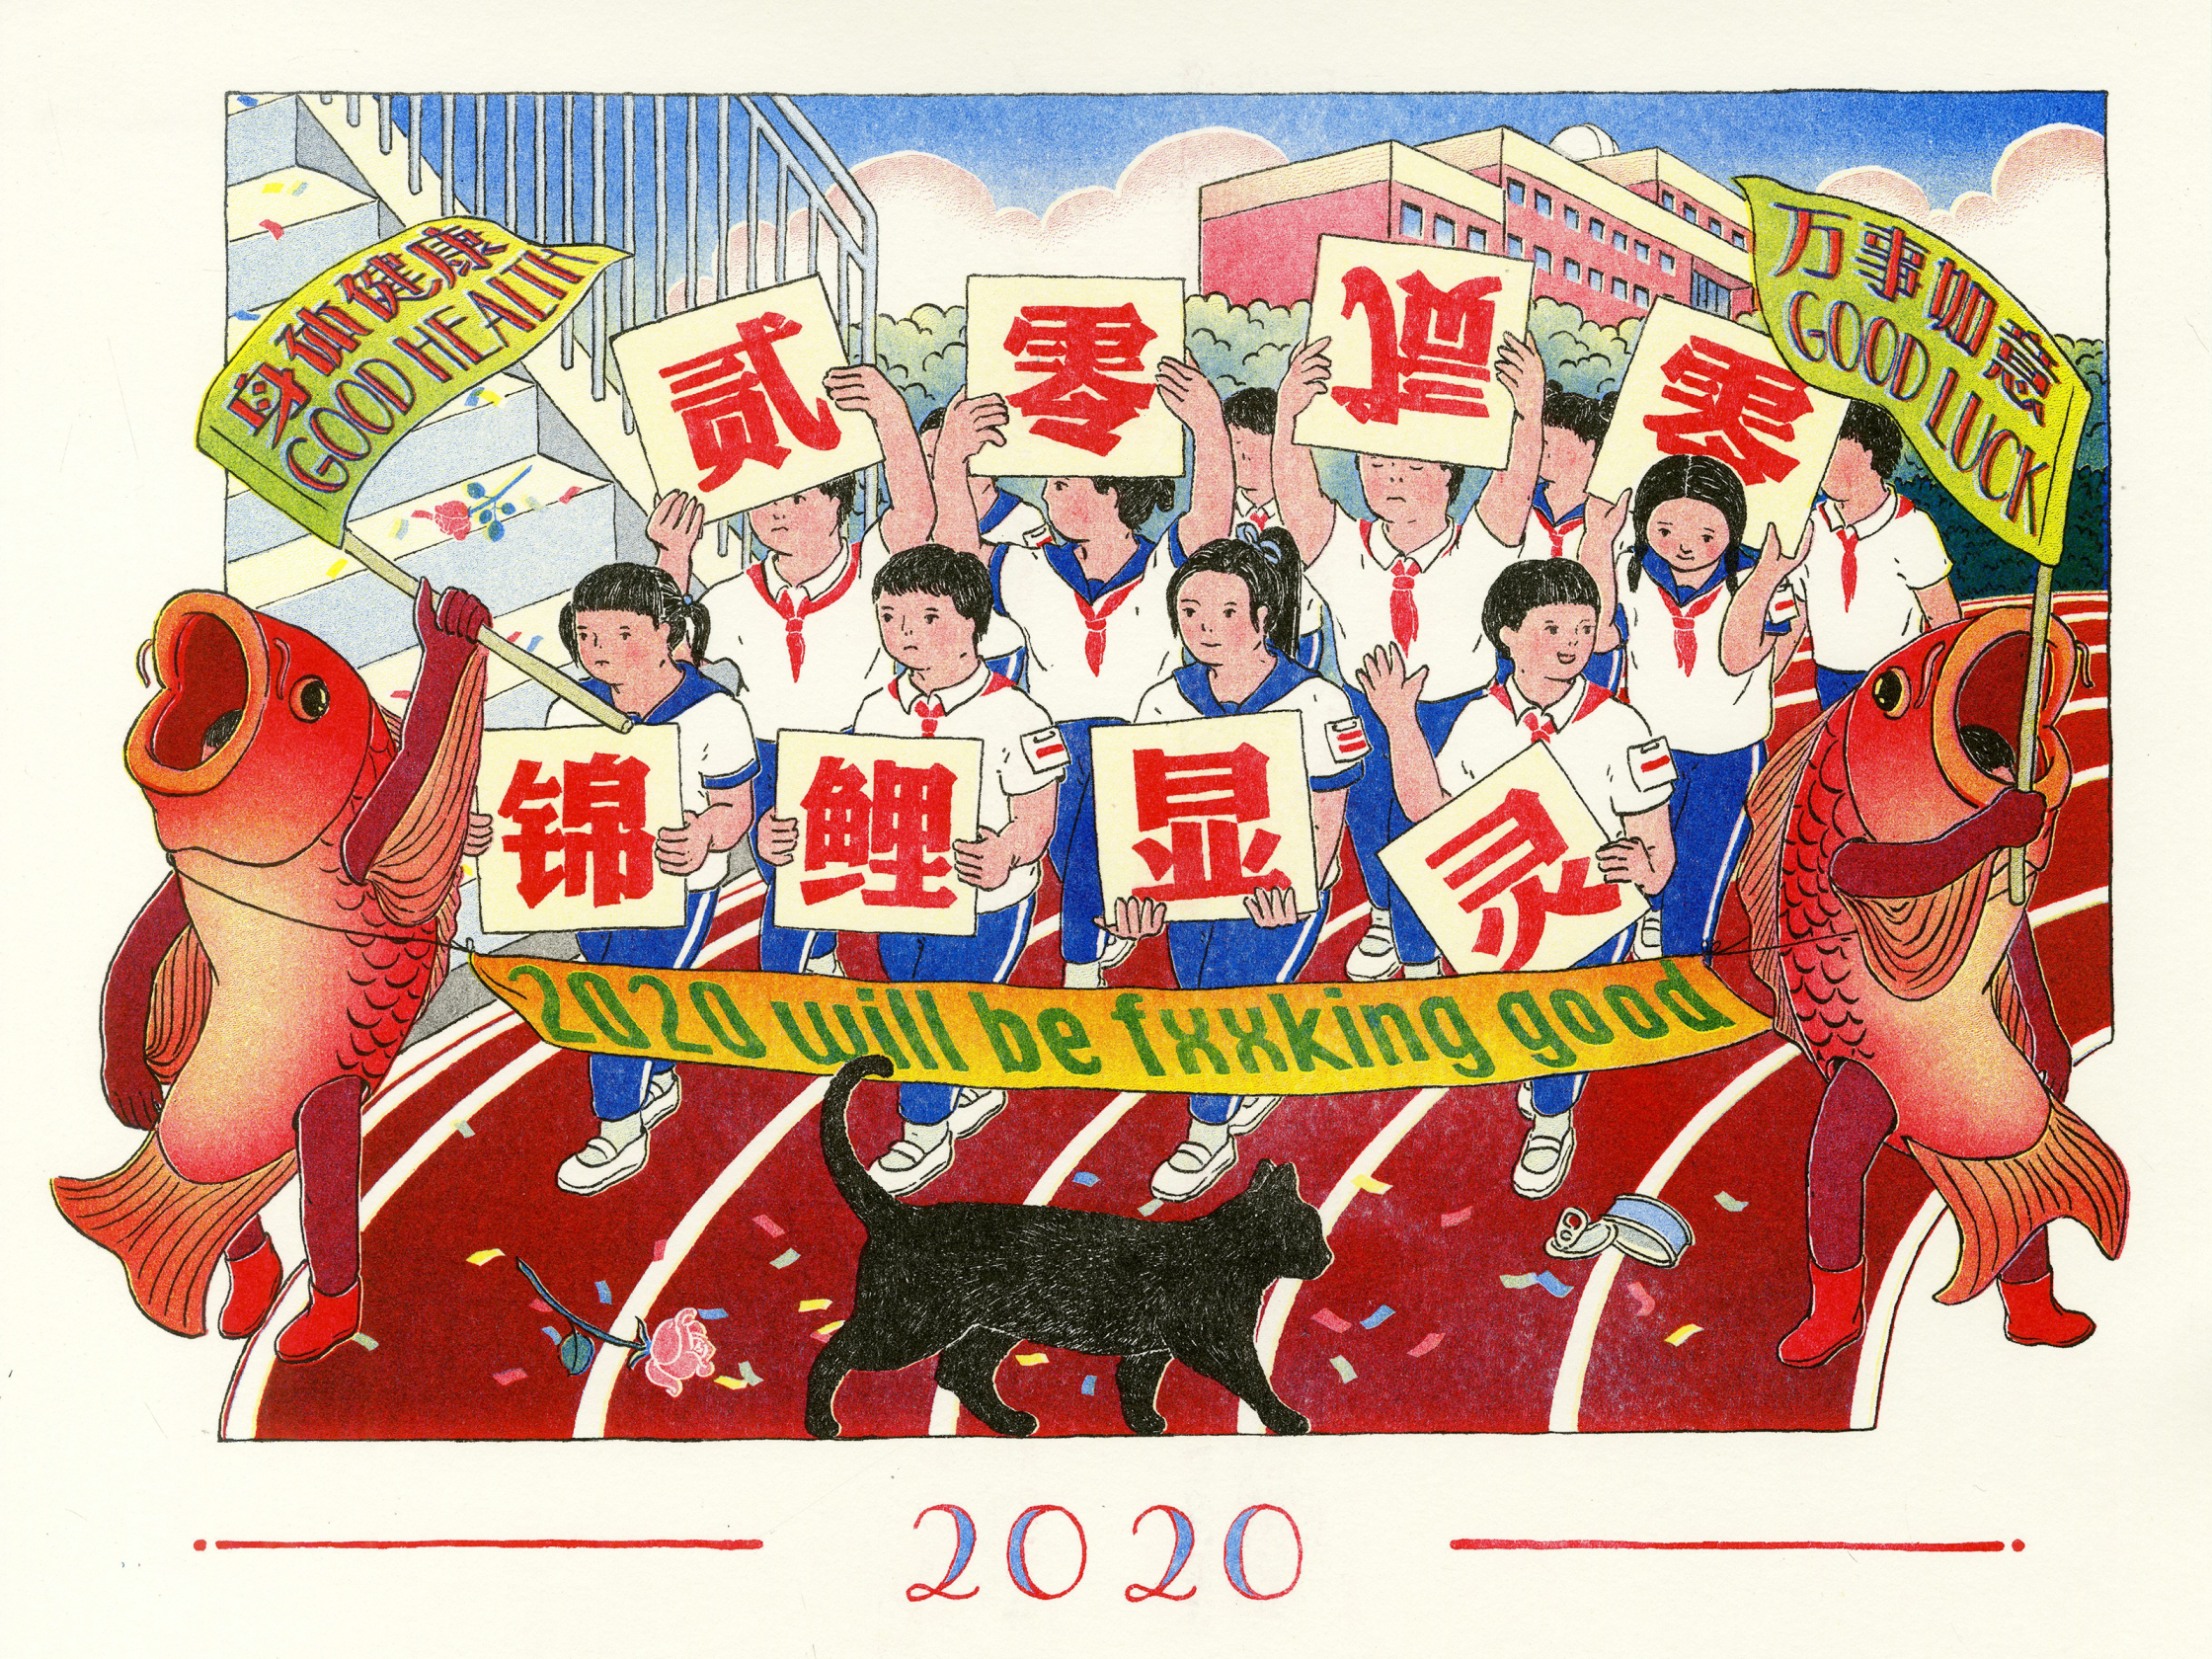 201911_calendar-2020-red-blue.jpg